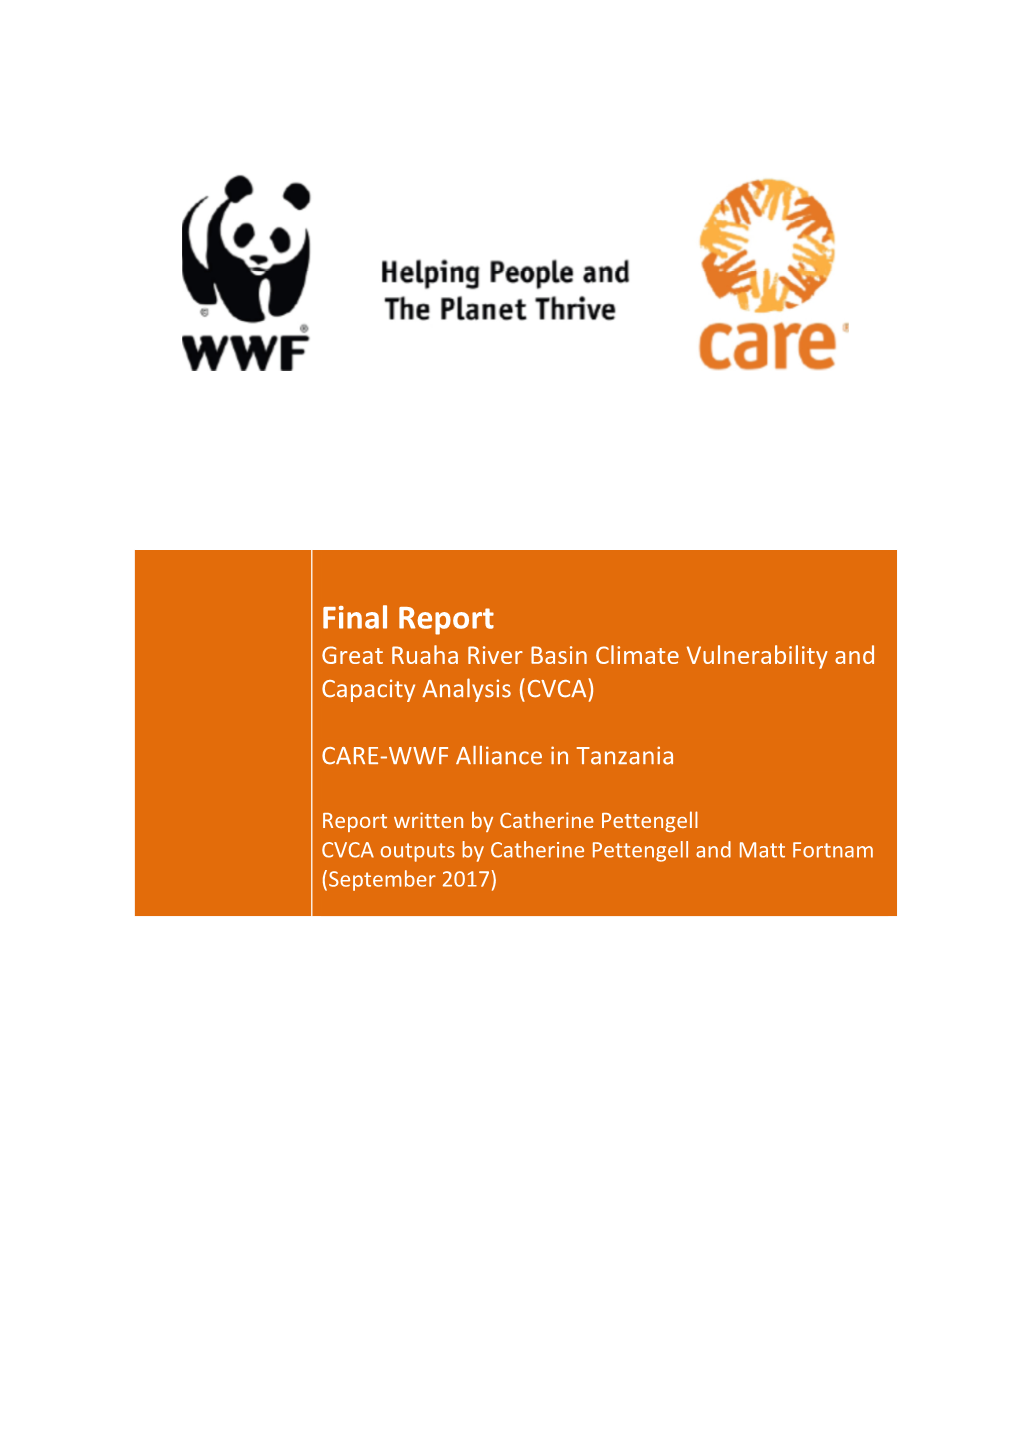 Final Report Great Ruaha River Basin Climate Vulnerability and Capacity Analysis (CVCA)